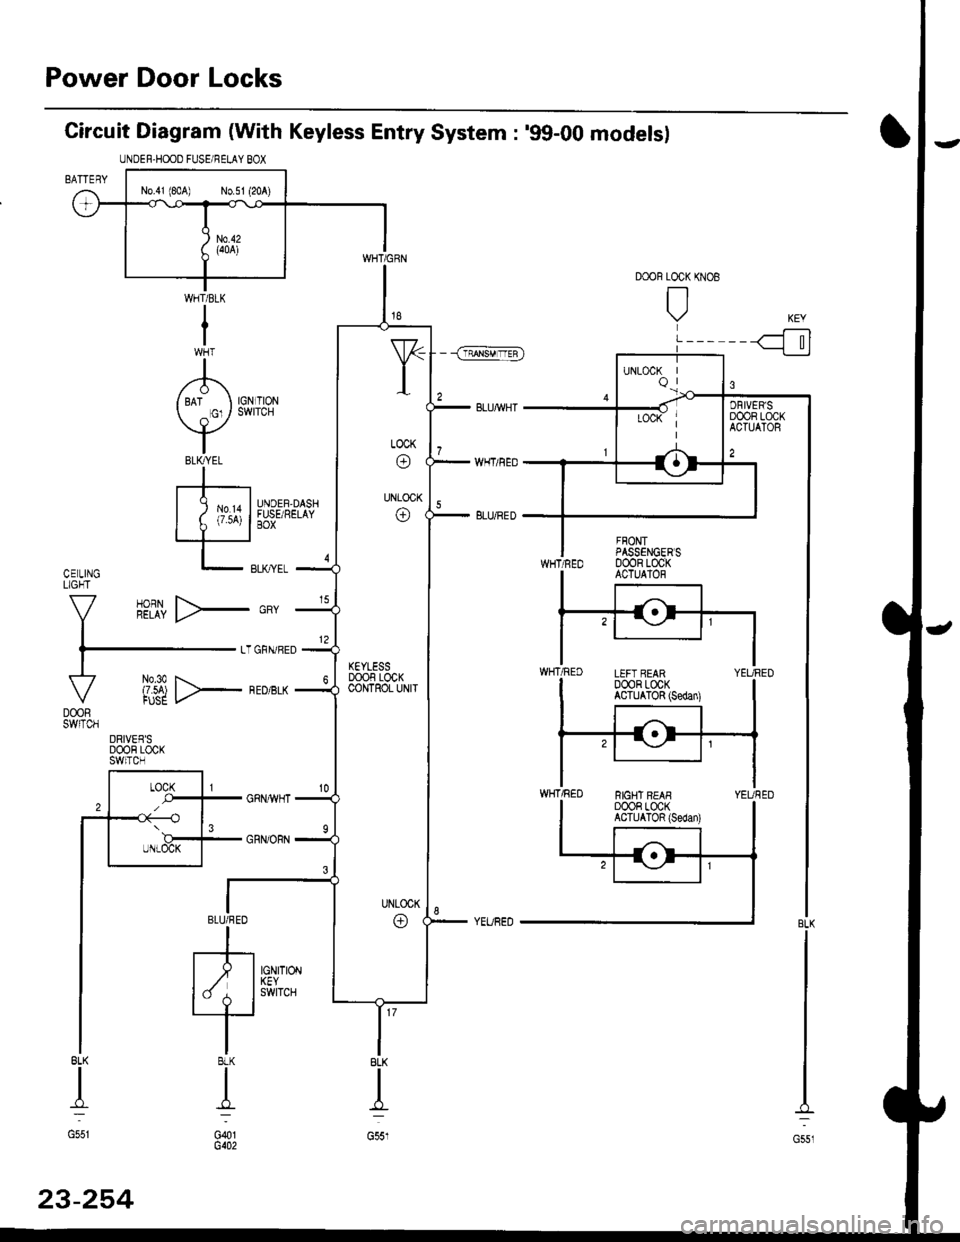 HONDA CIVIC 1997 6.G Workshop Manual Power Door Locks
Circuit Diagram (With Keyless Entry System : 99-00 models)
BL(
I
G551
UNDEF.HOOO FUSE/RELAY BOX
N0.41 1804) N0.51 (20 )
KEYLESSDOOF LOCKCOIJTROL UNIT
DRIVEFSDOOF LOCKSWITCH
23-254 